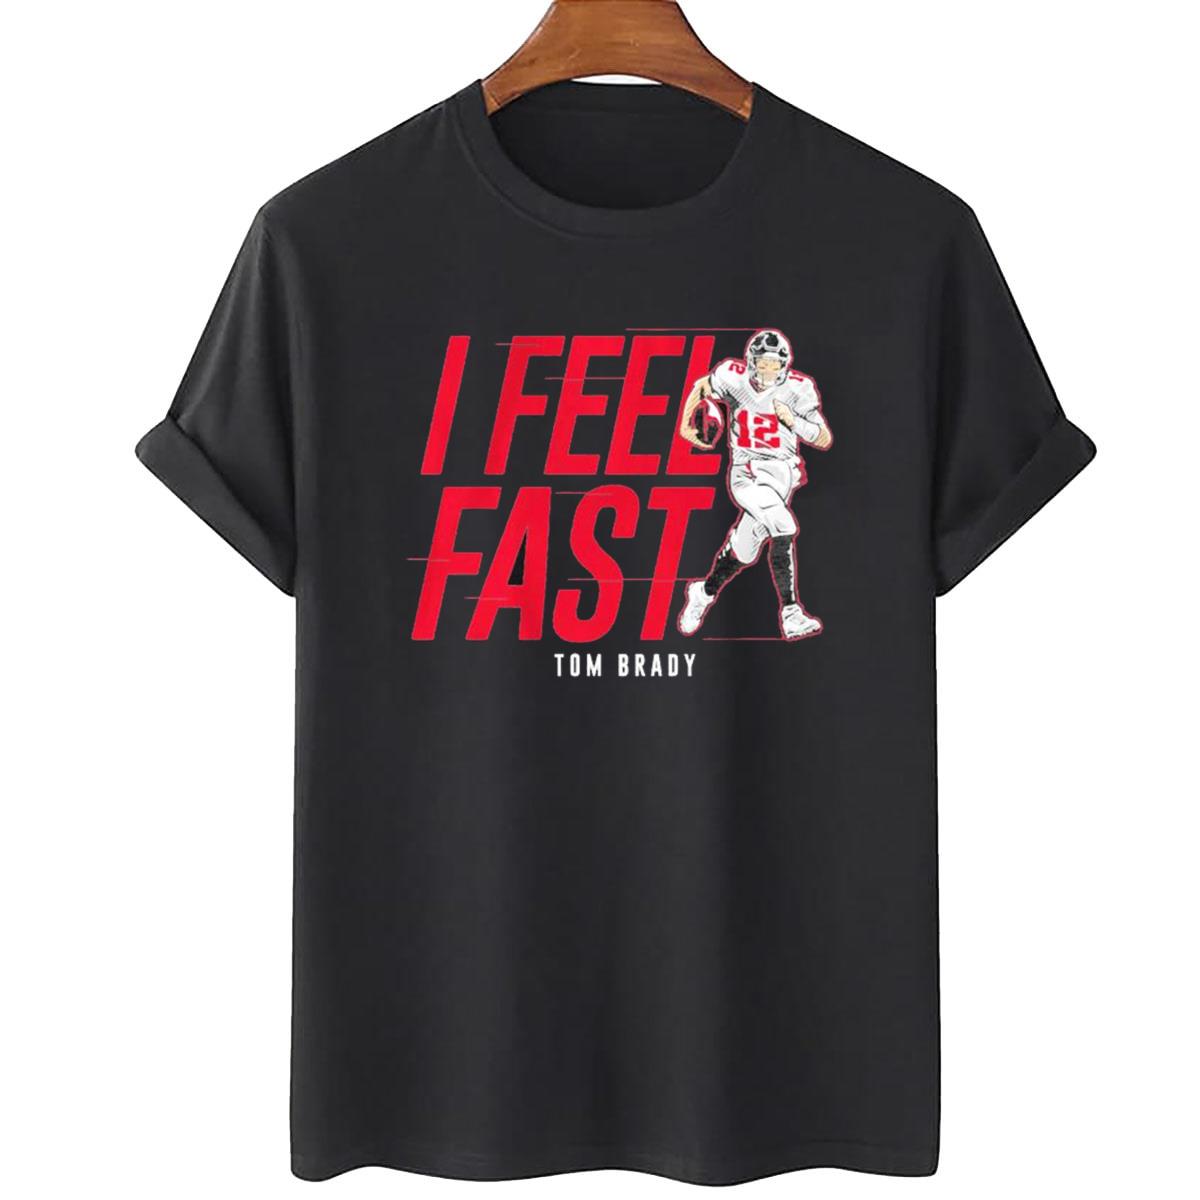 Tom Brady Still Feels Fast Unisex T-Shirt